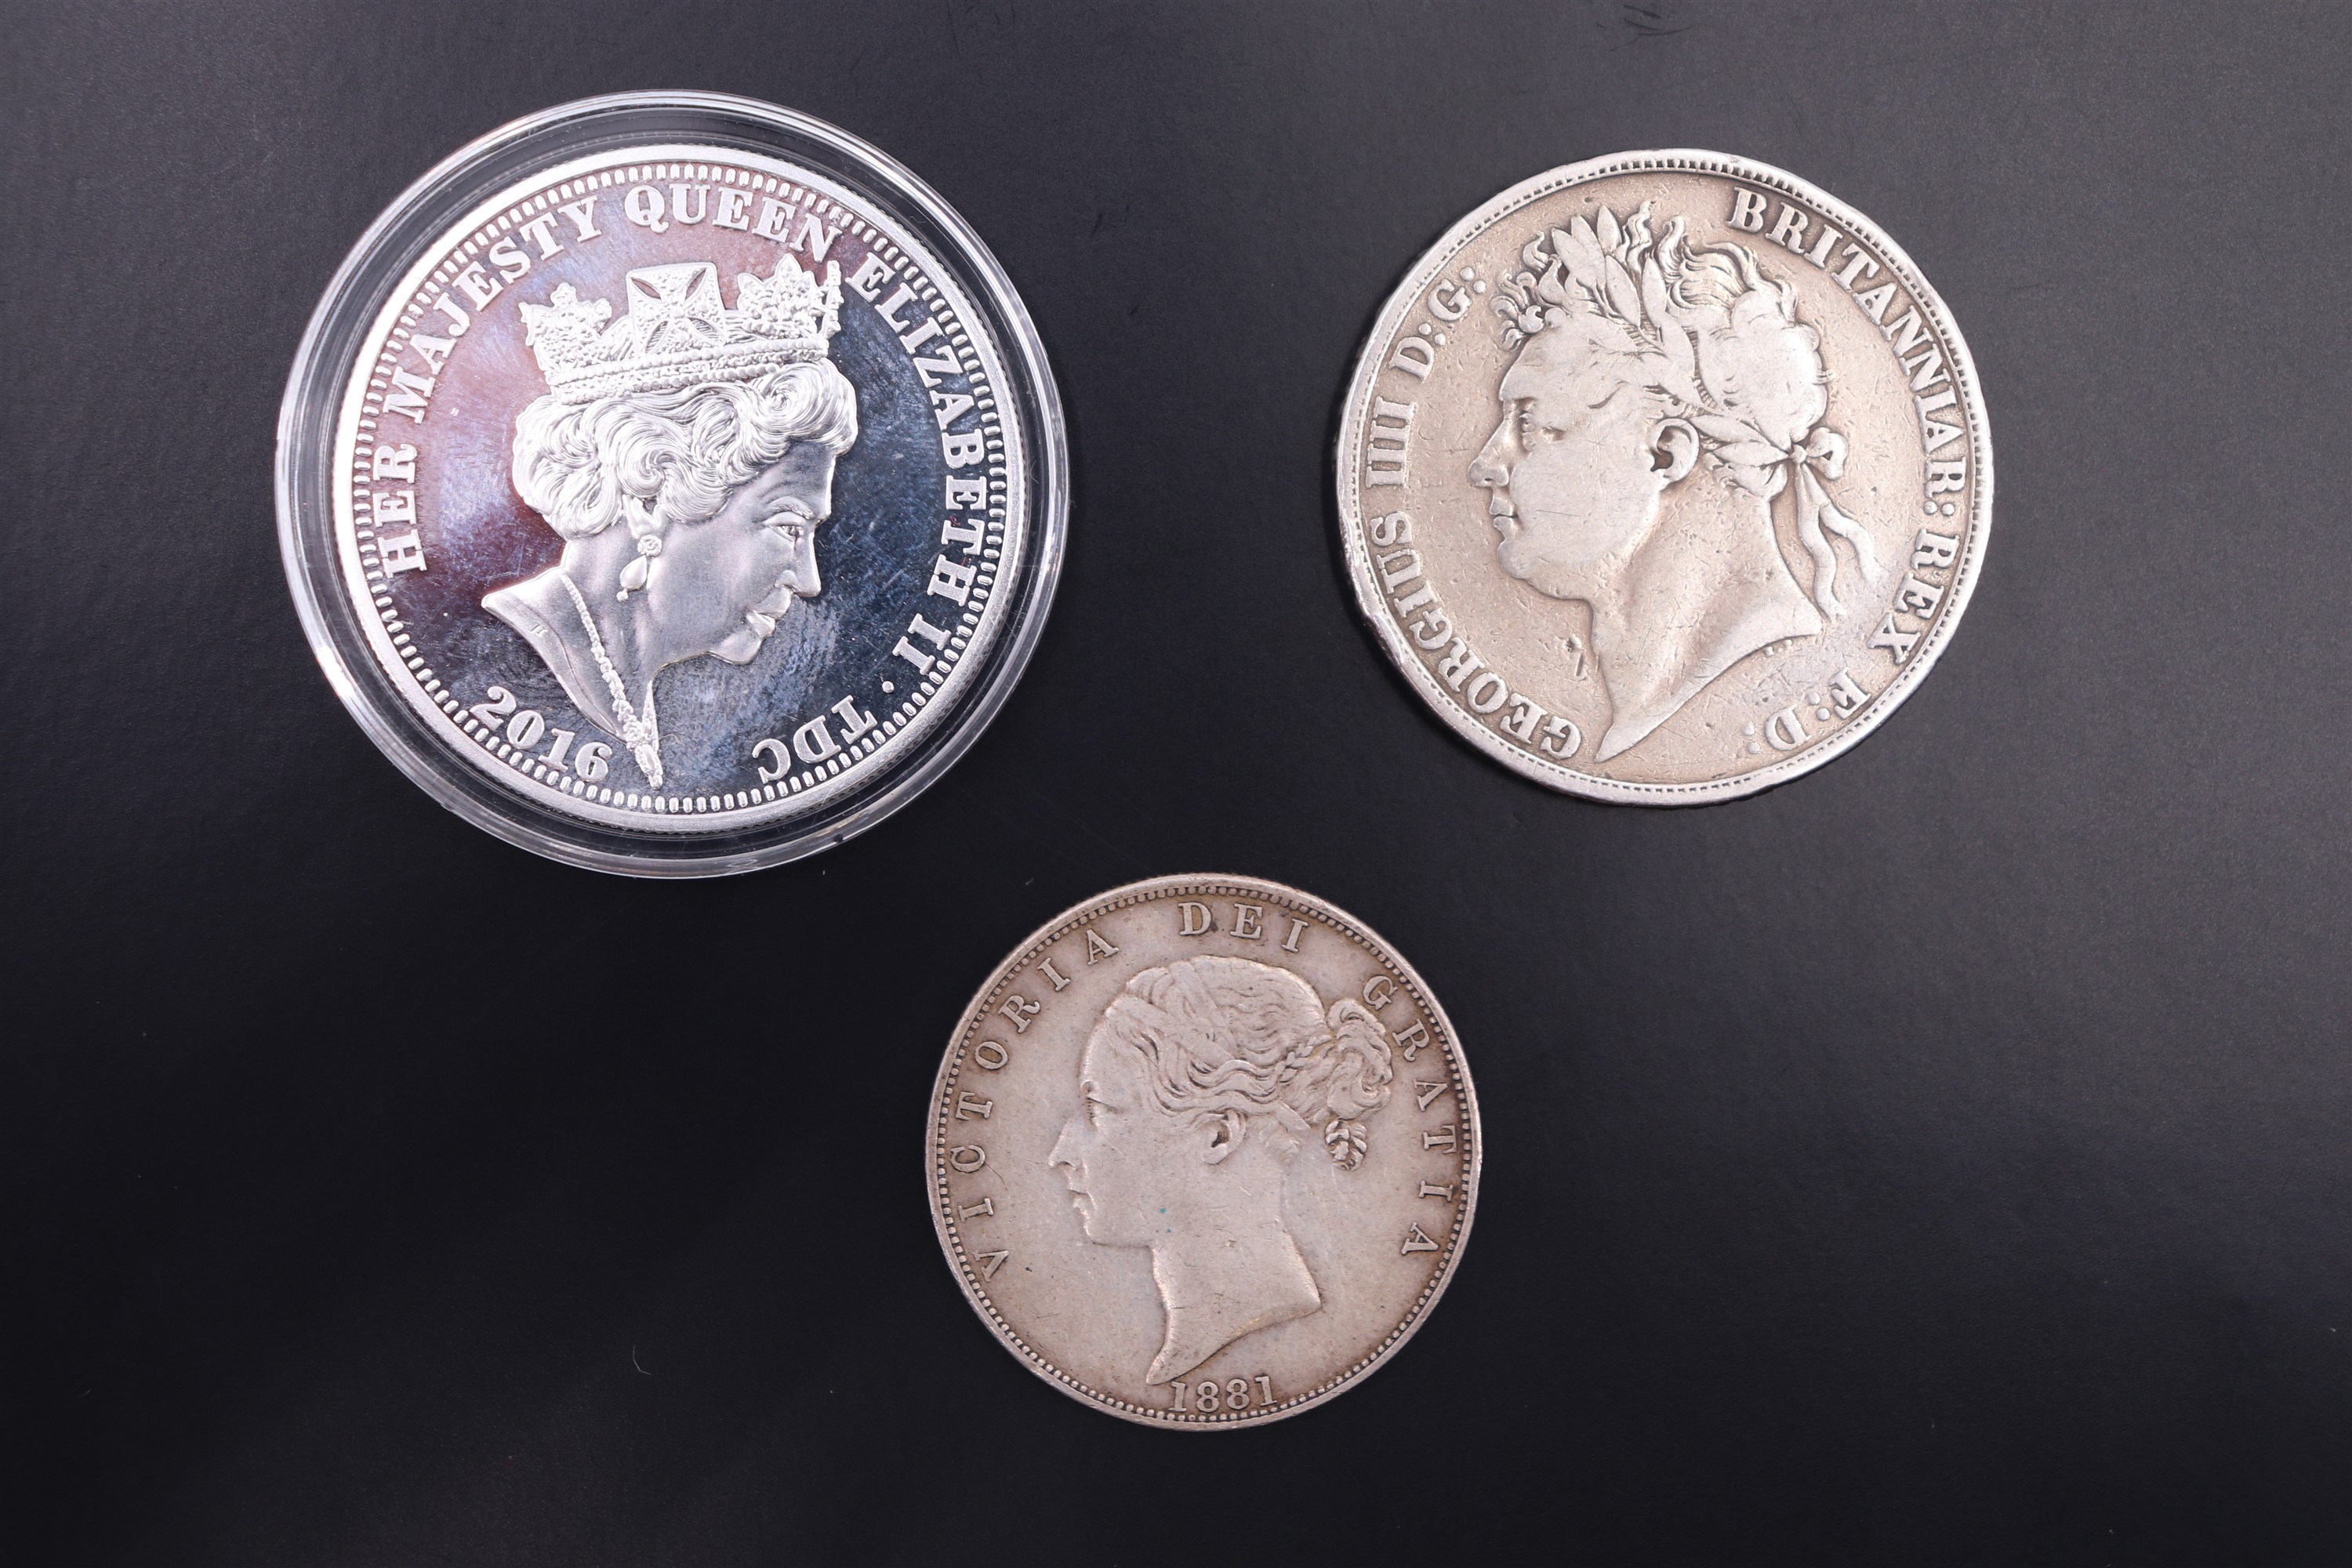 A George IV 1821 silver crown coin, an 1881 half crown and a 2016 silver £5 coin